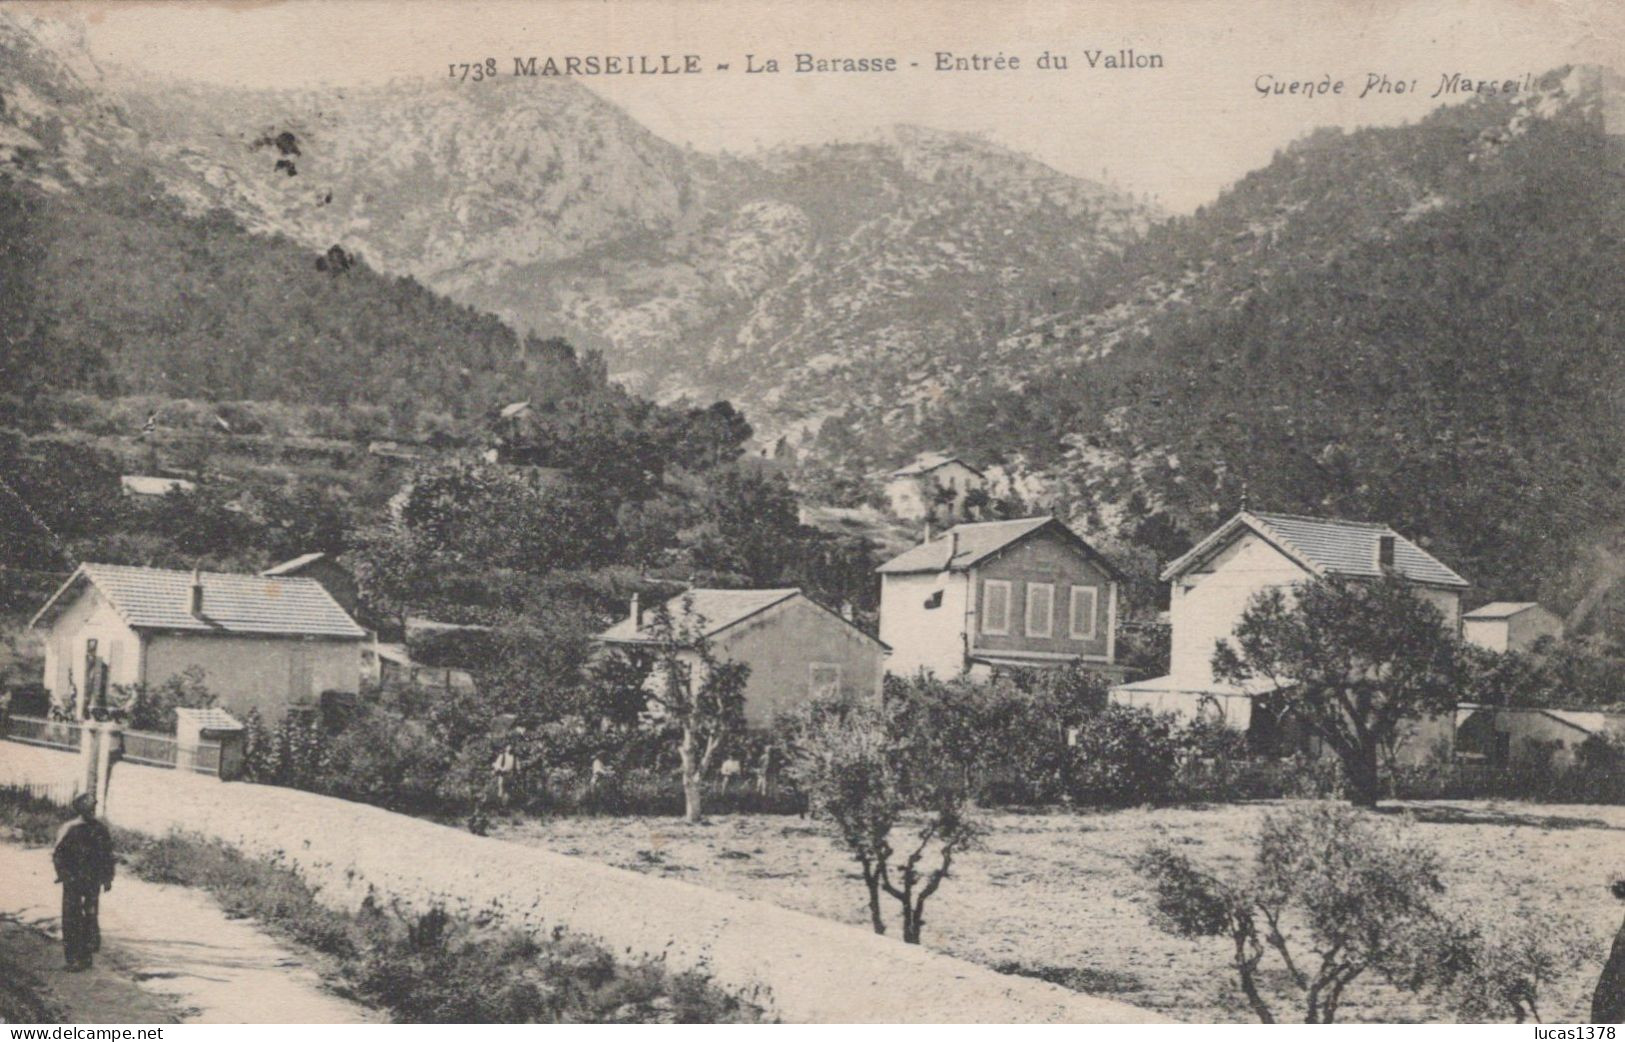 13 / MARSEILLE / LA BARASSE / LA BARASSE / ENTREE DU VALLON / GUENDE 1738 - Saint Marcel, La Barasse, Saintt Menet